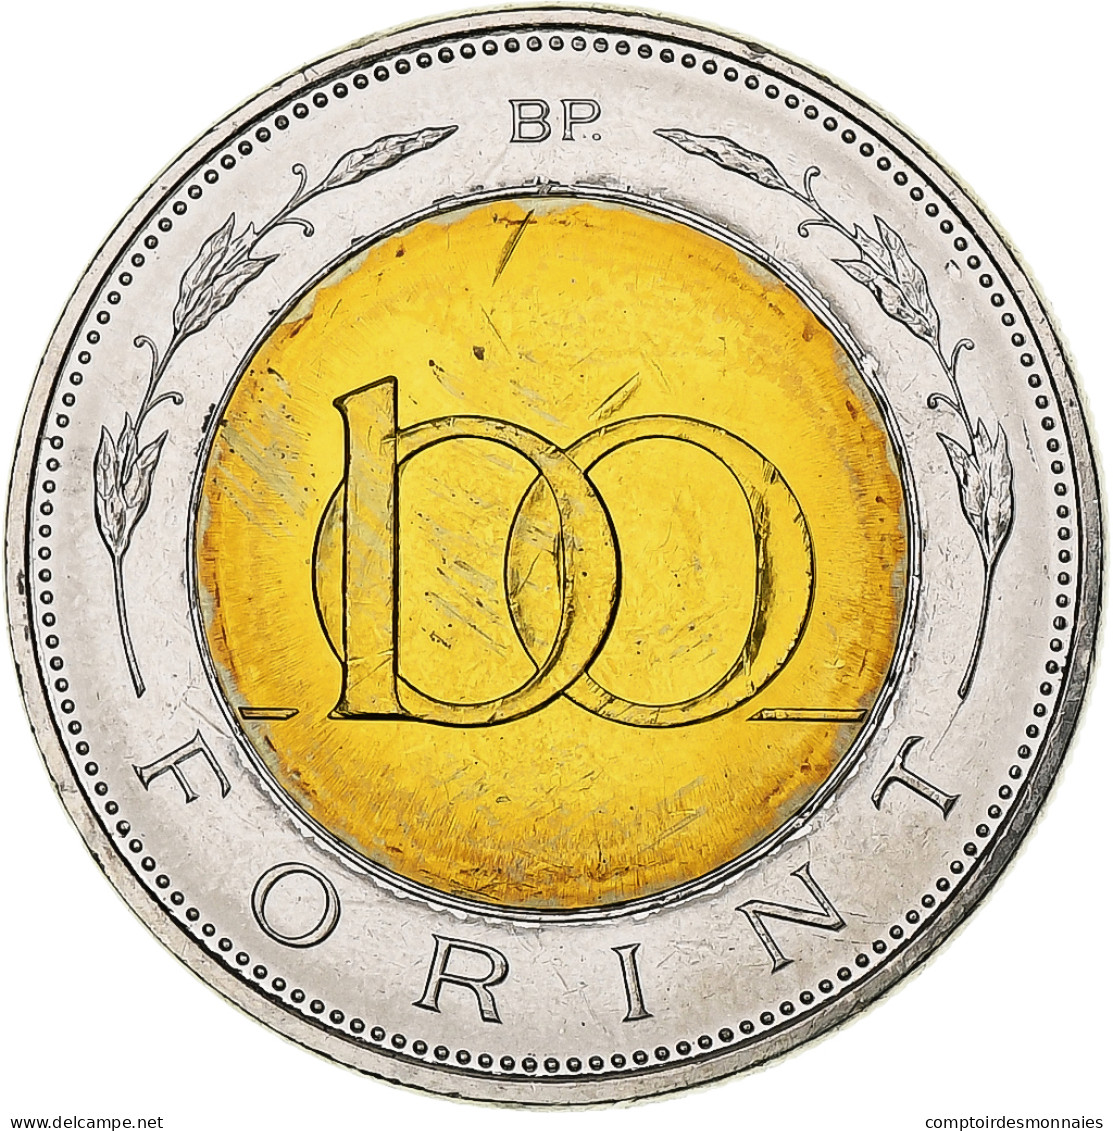 Hongrie, 100 Forint, Szaz, 2007, Budapest, Bimétallique, SPL+, KM:721 - Hungary